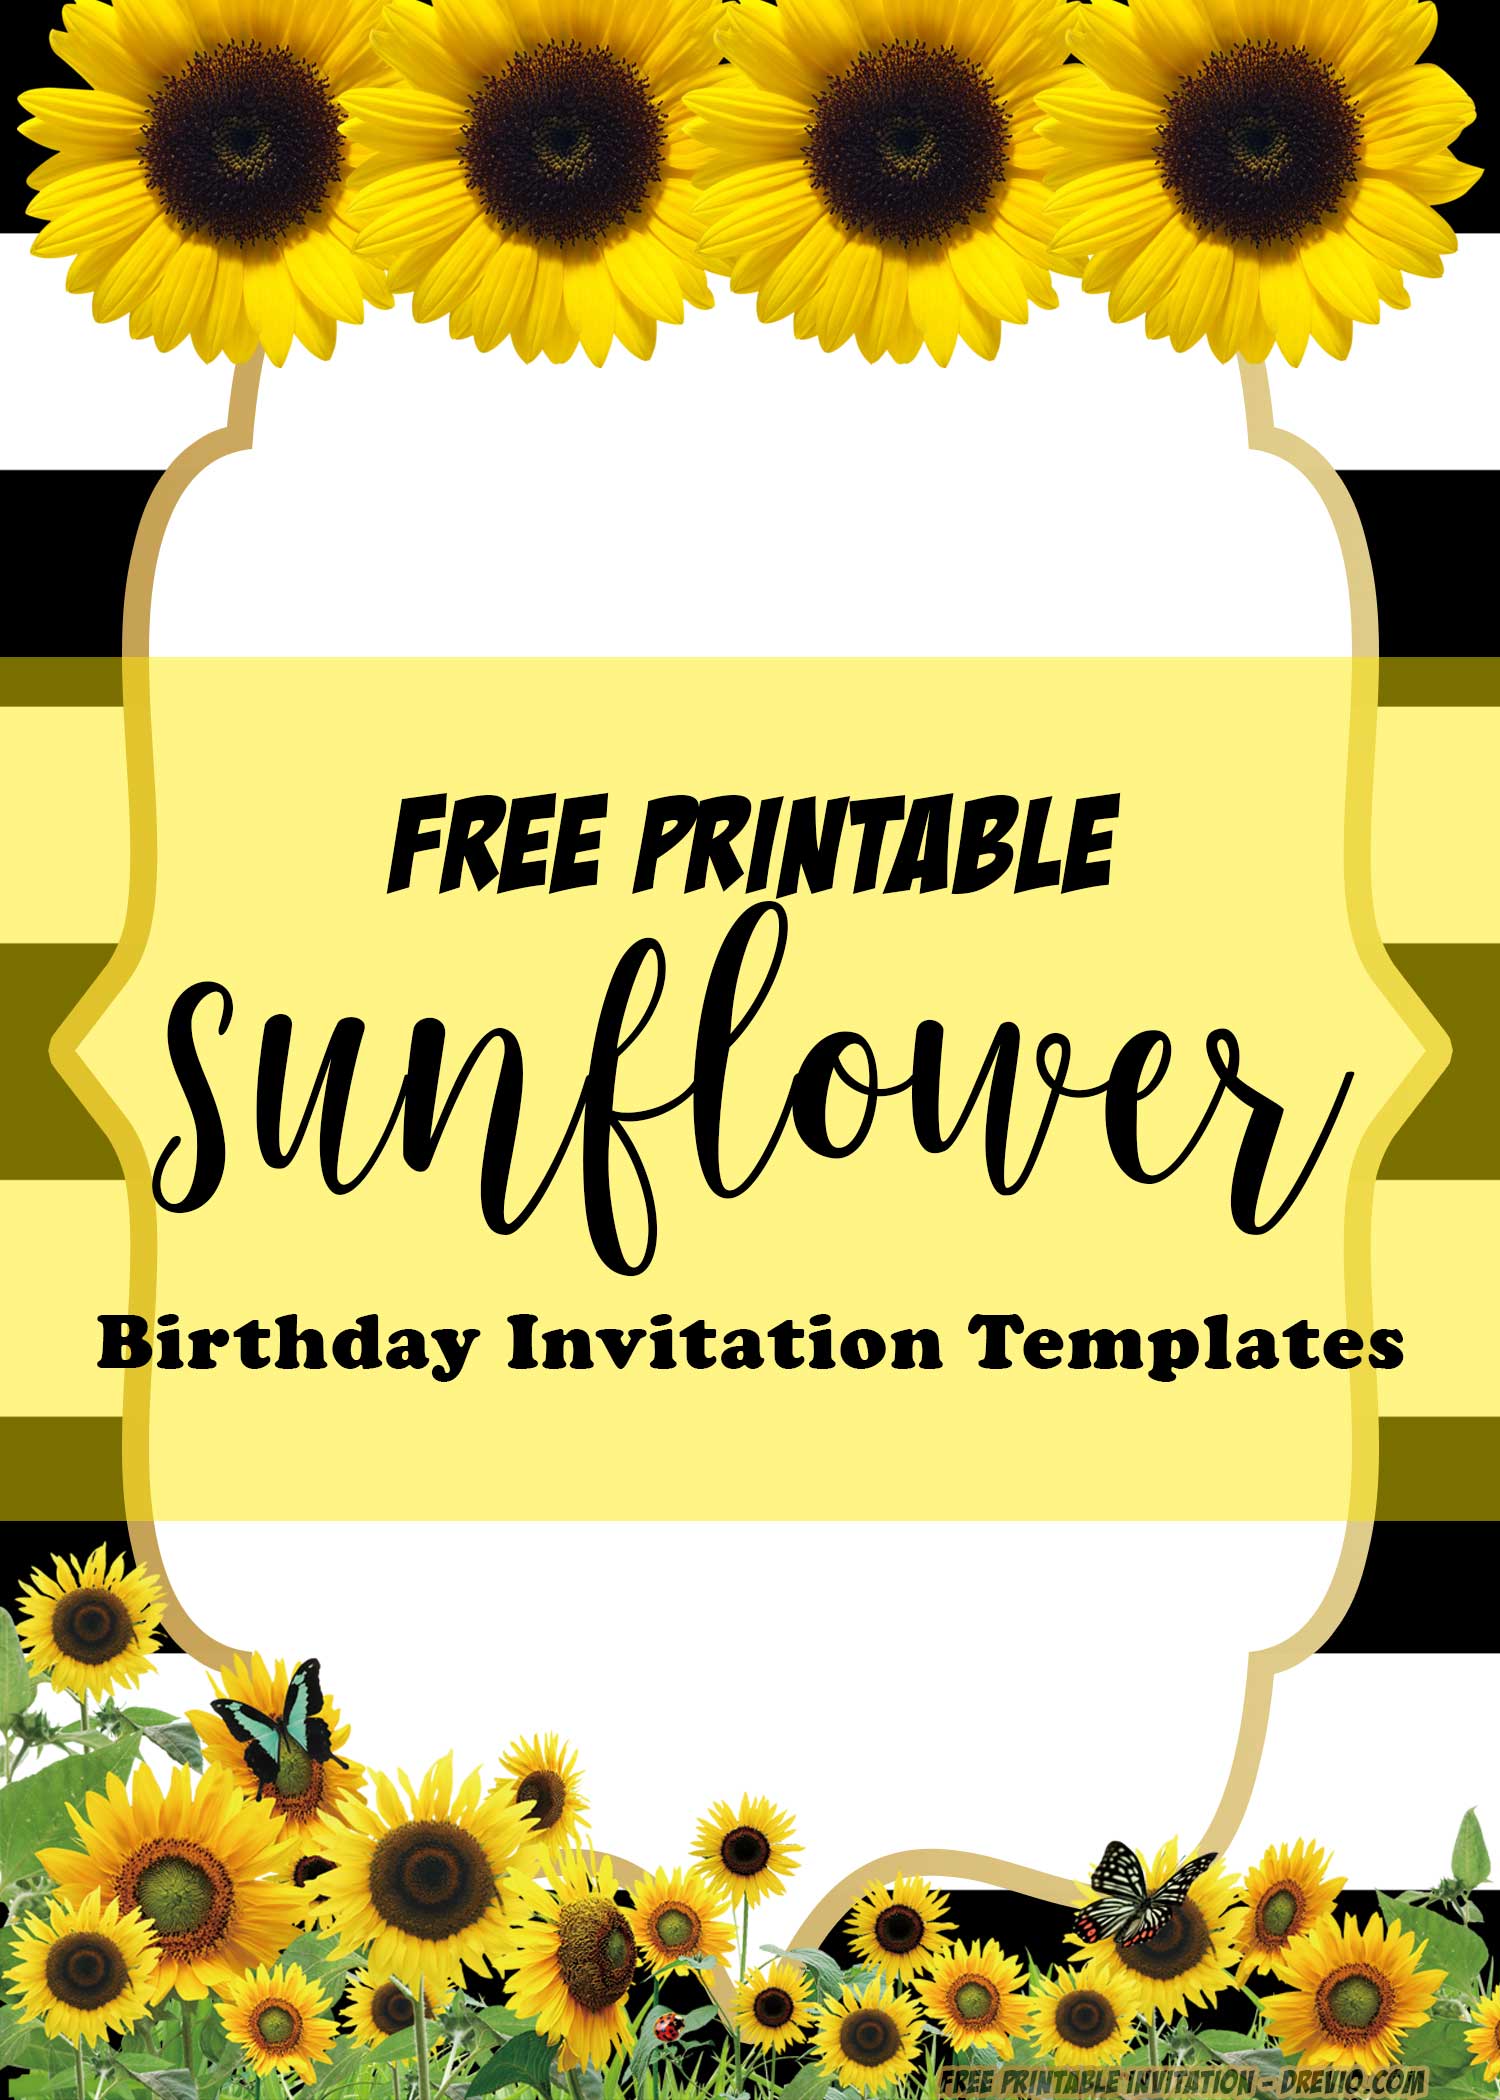 free-printable-sunflower-birthday-invitation-templates-download-hundreds-free-printable